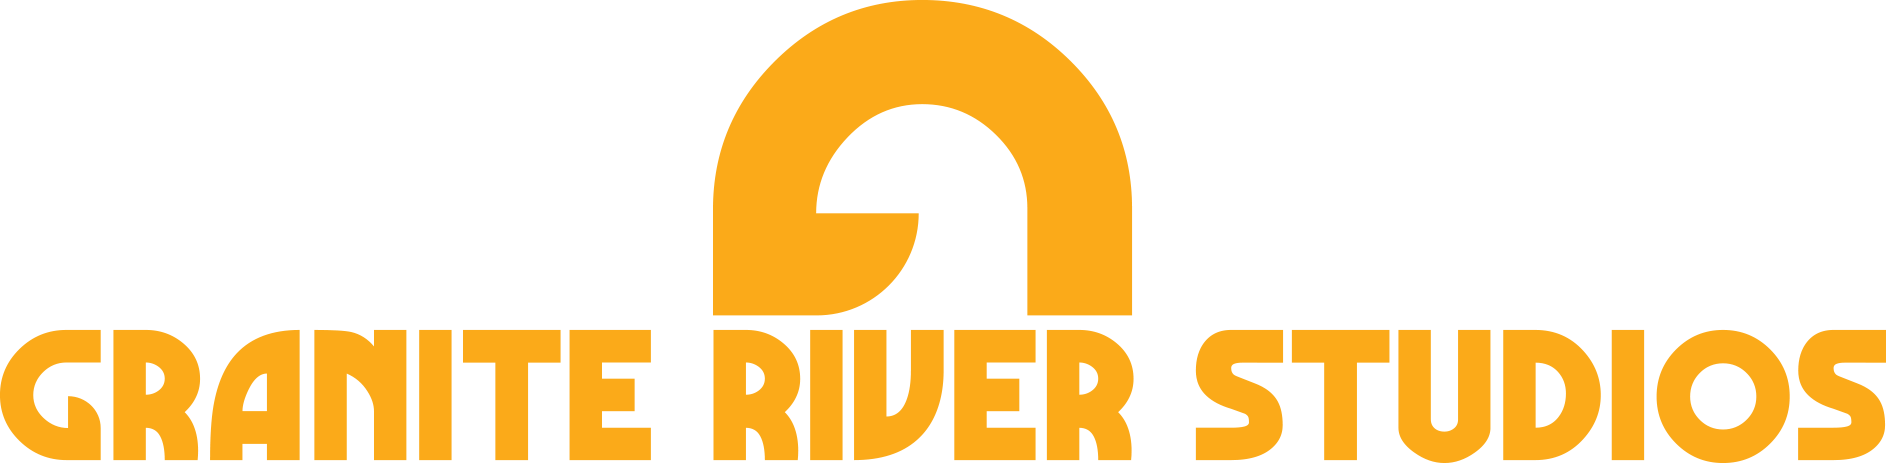 granite river studios gold text logo